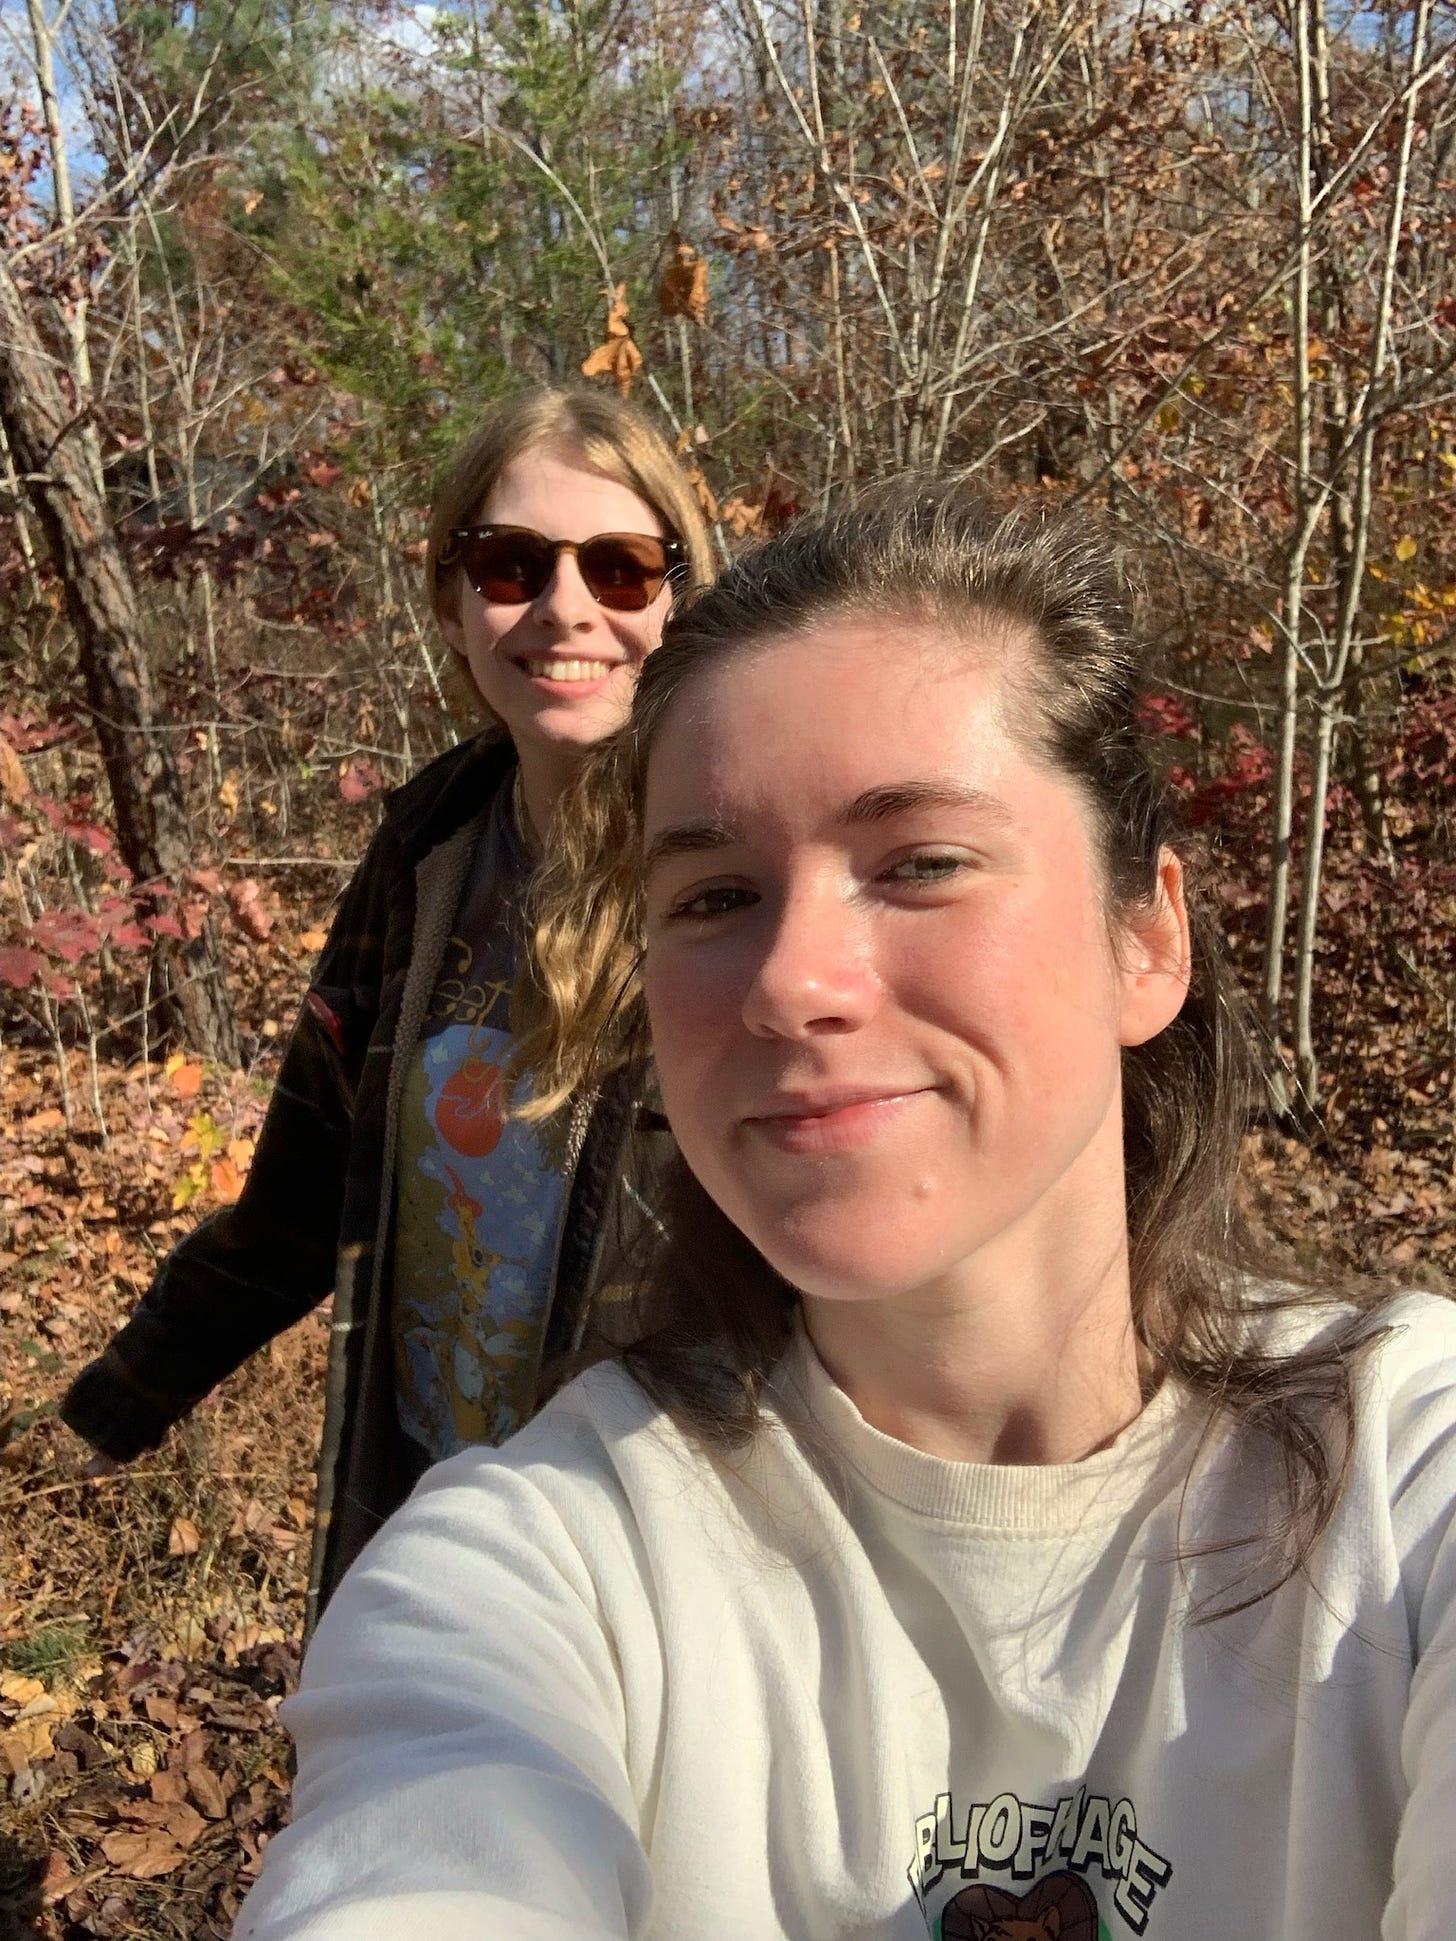 Kayla Stark and Vivien Mildenberger together in an autumnal forest